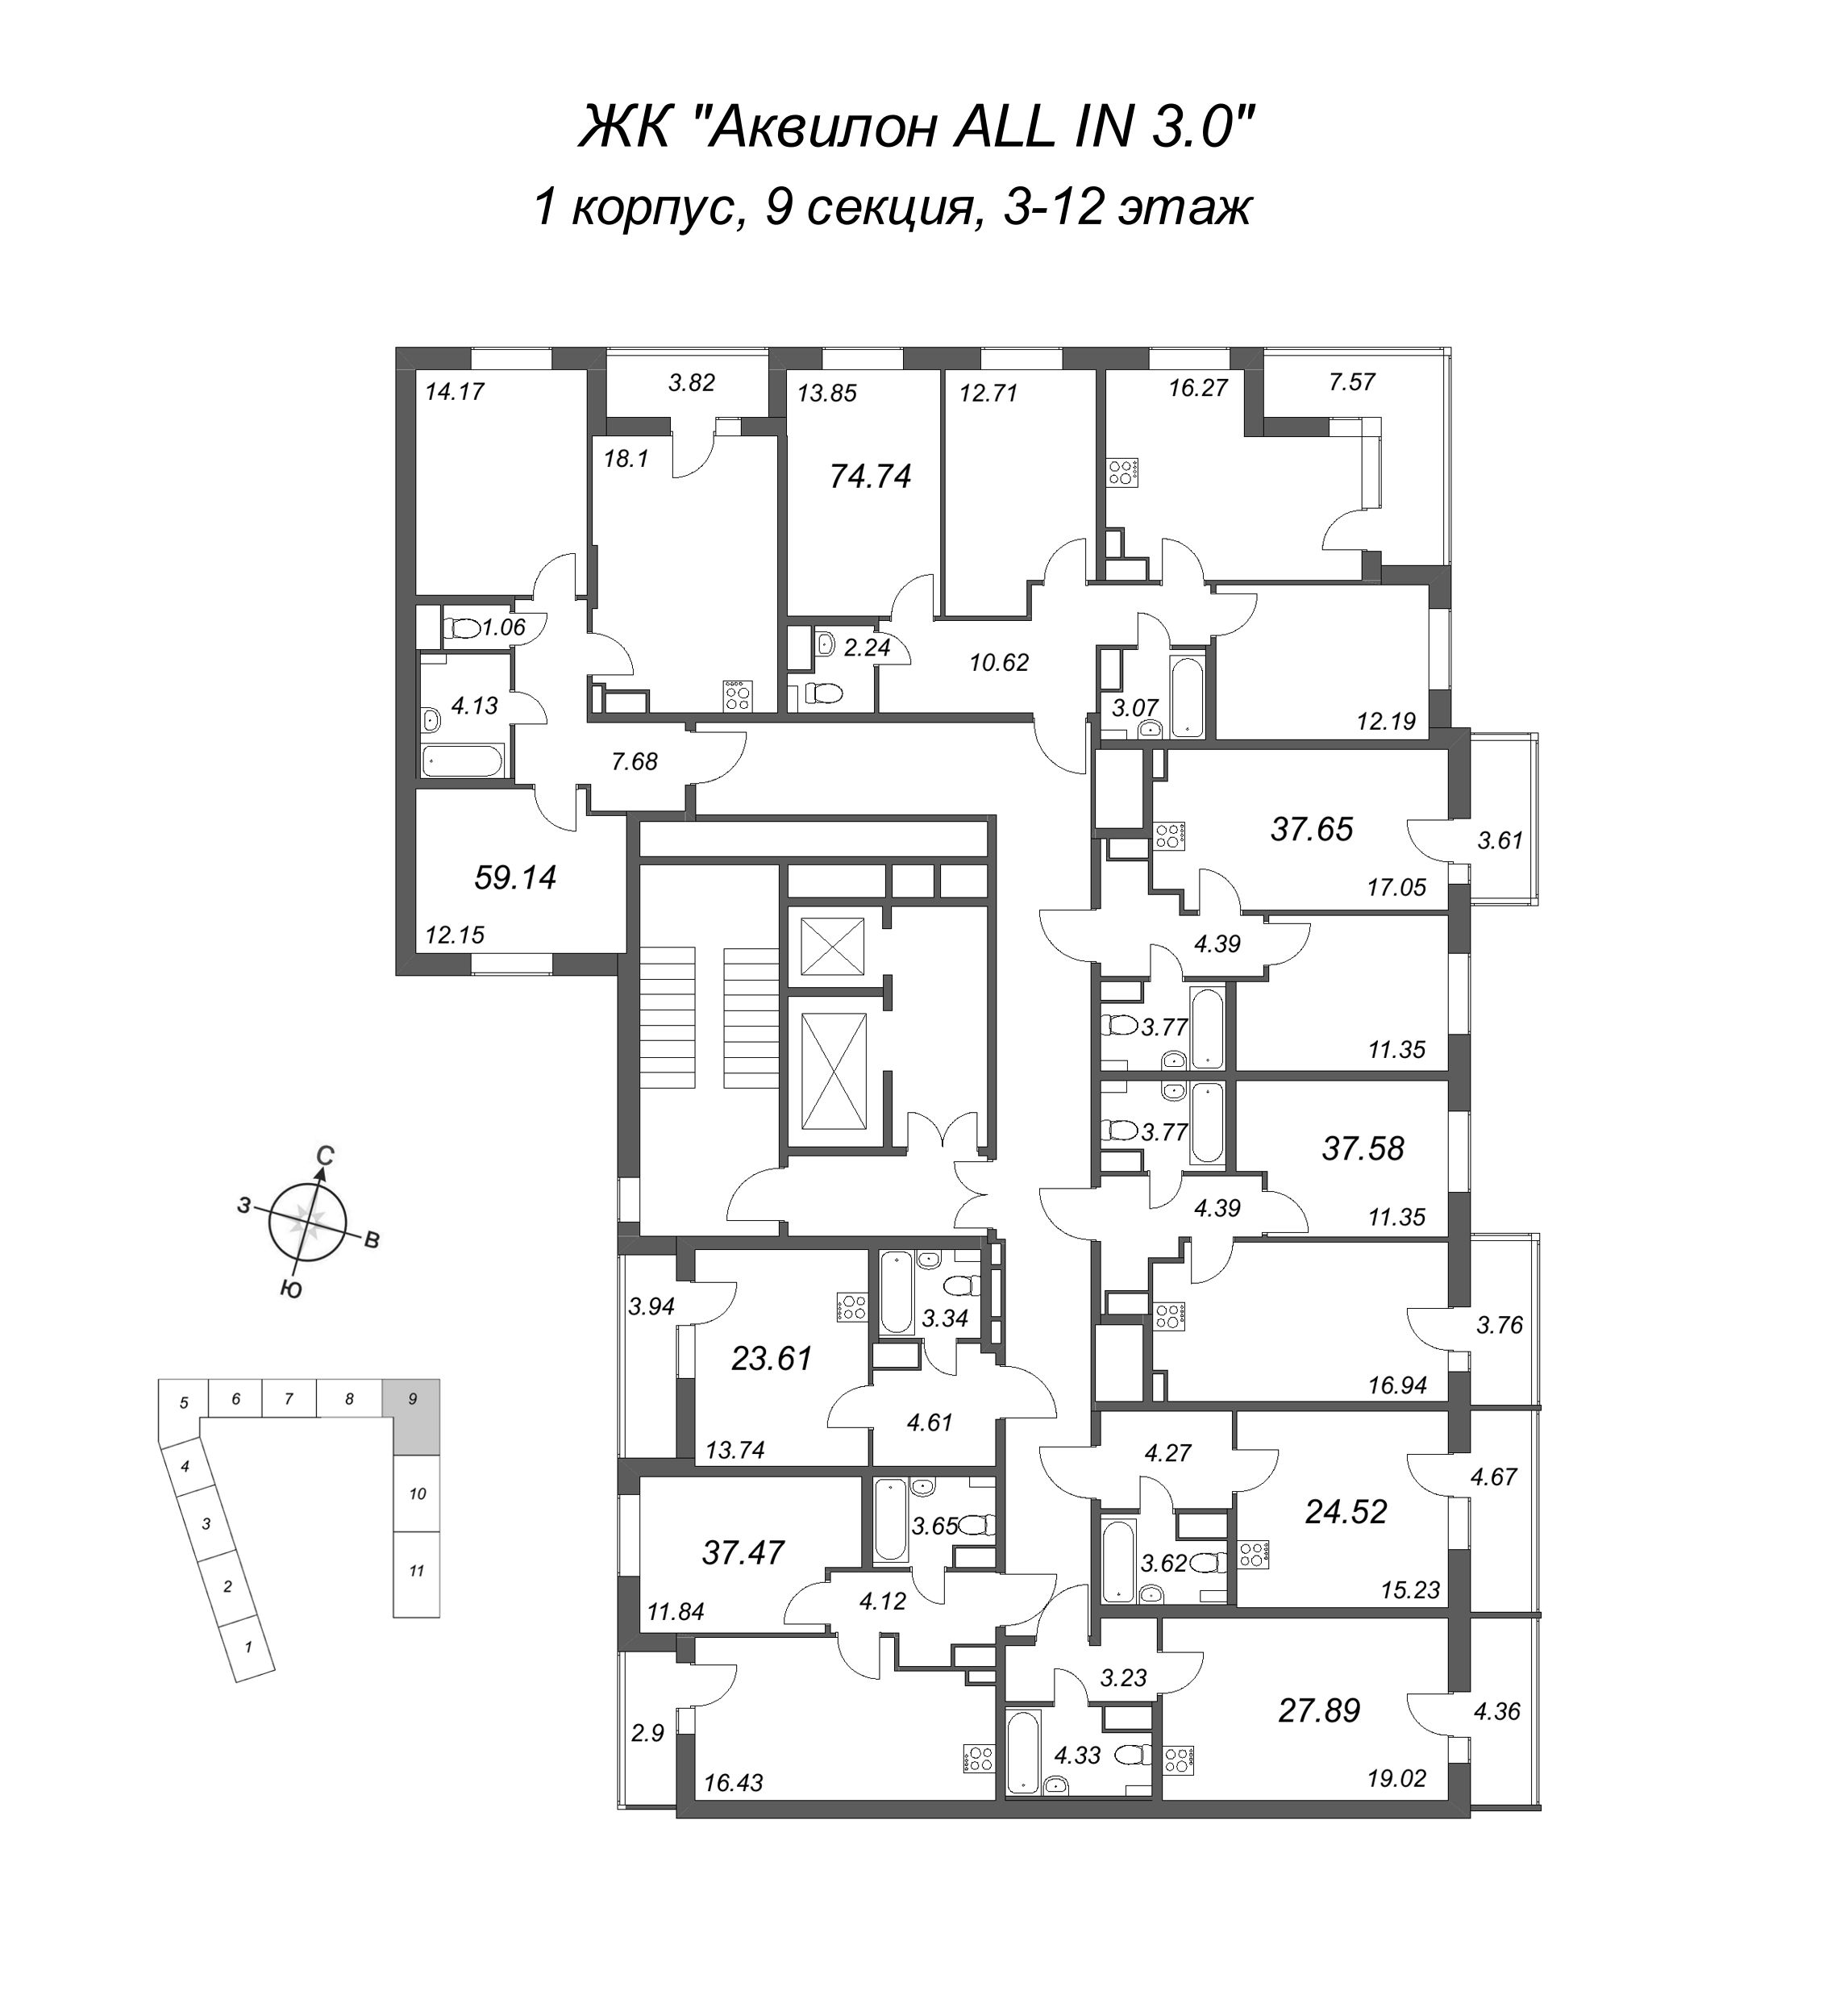 2-комнатная (Евро) квартира, 37.65 м² - планировка этажа